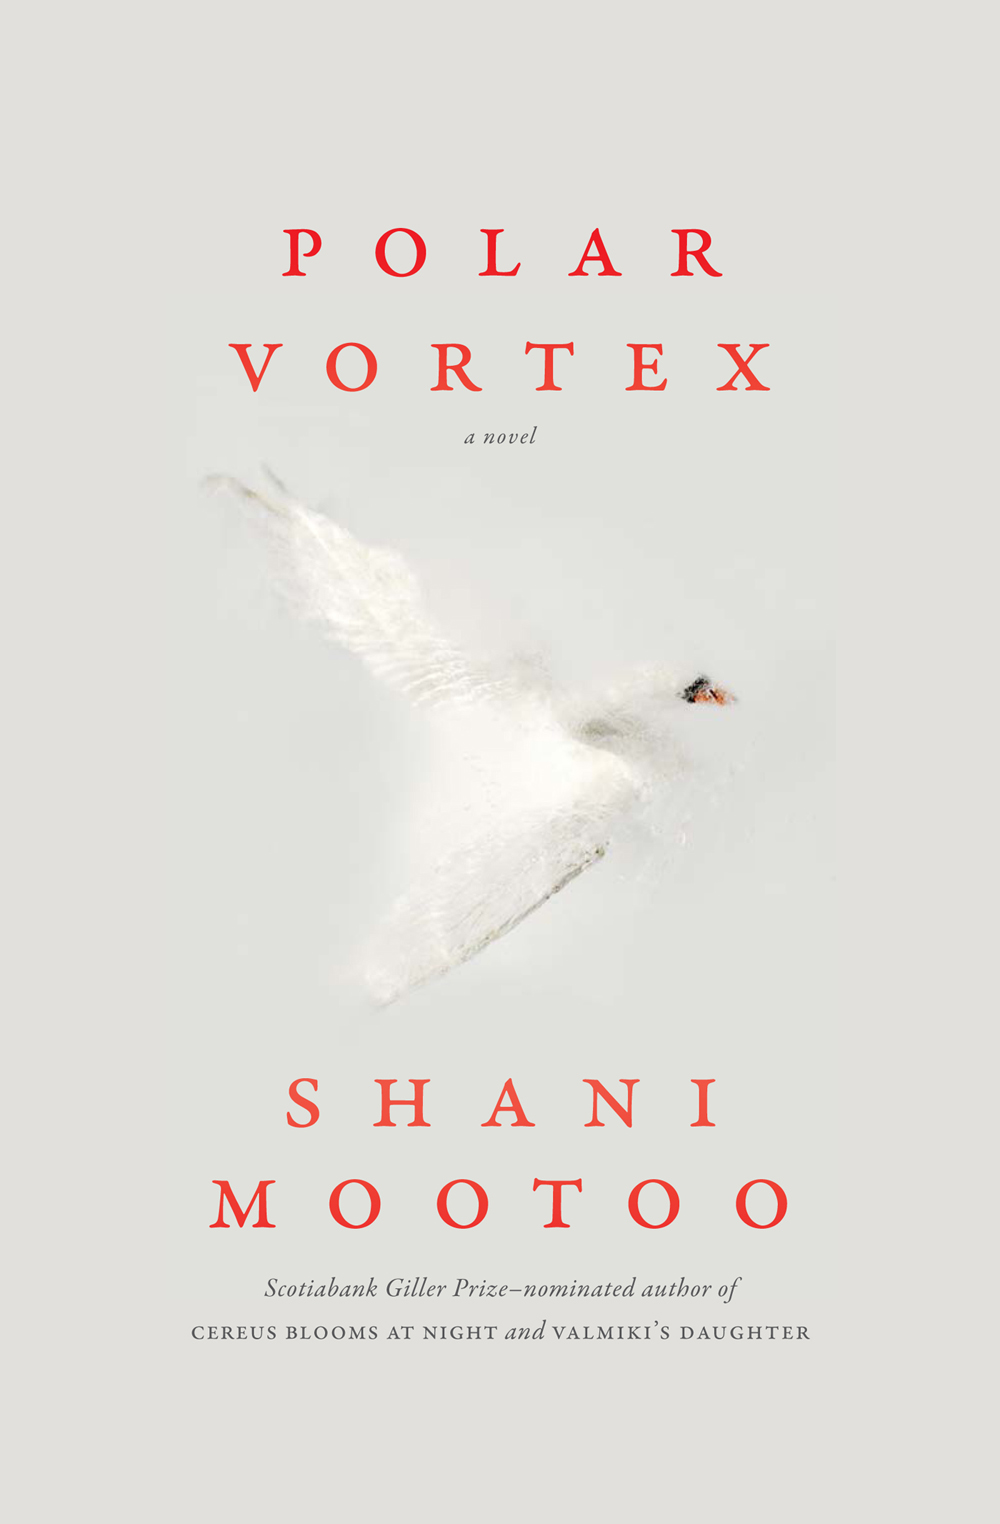 Mootoo, Shani - Polar Vortex - BookCover